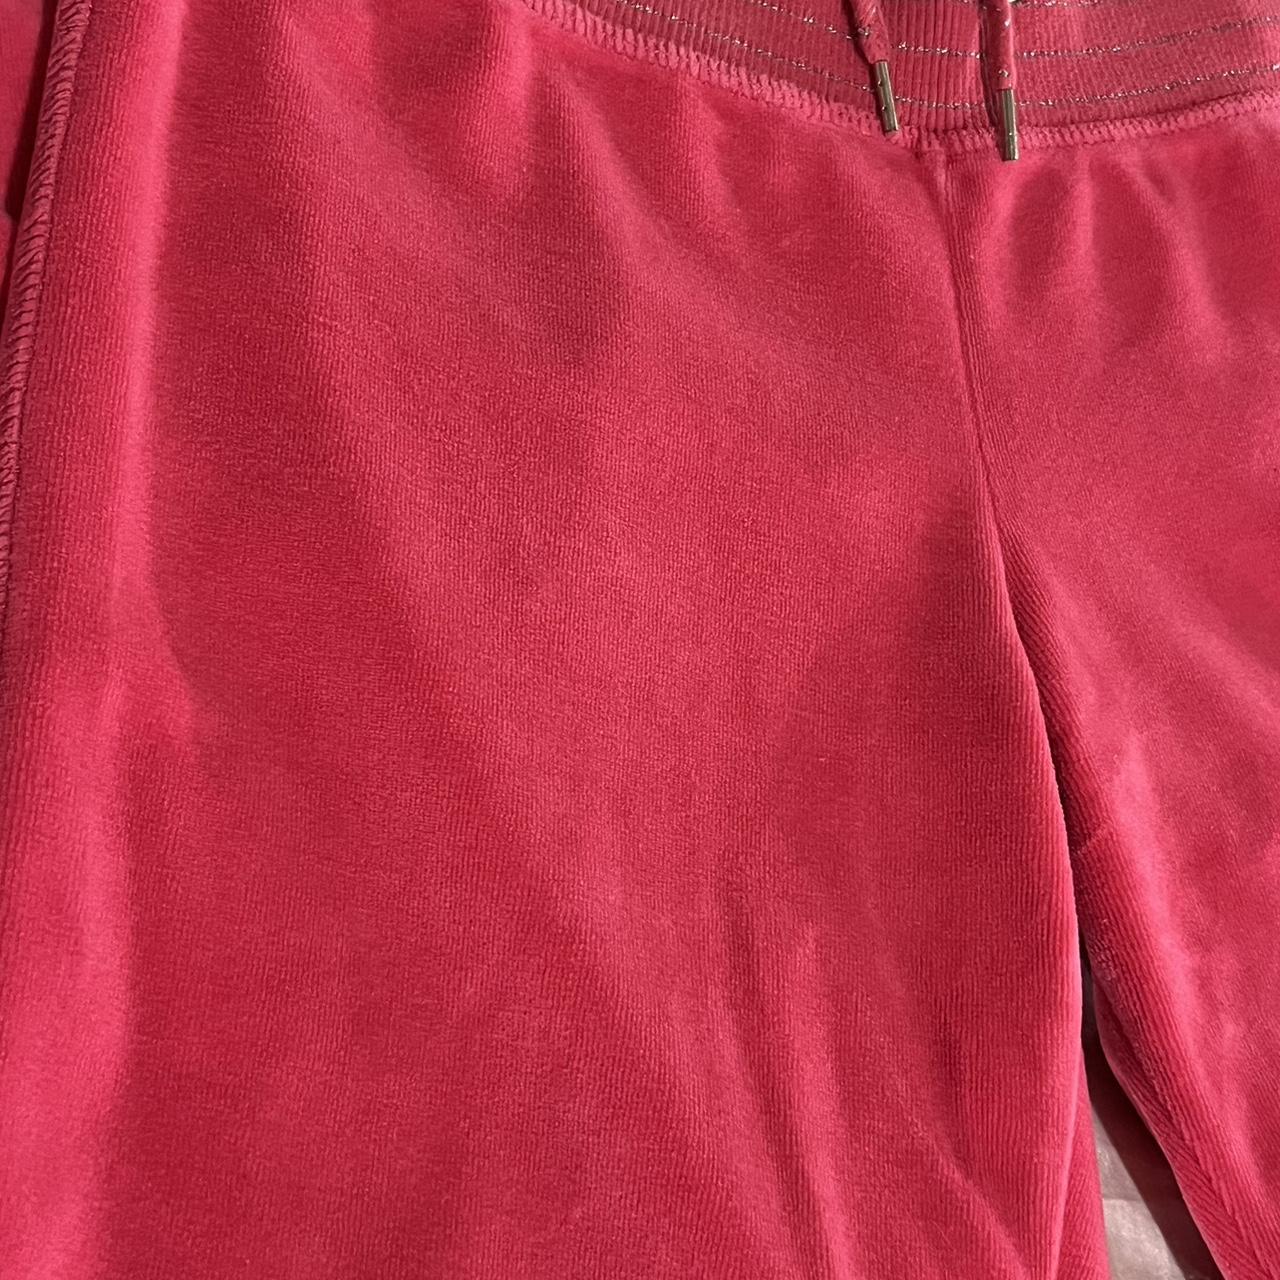 pink velour track pants ⭐️no flaws ⭐️brand:... - Depop